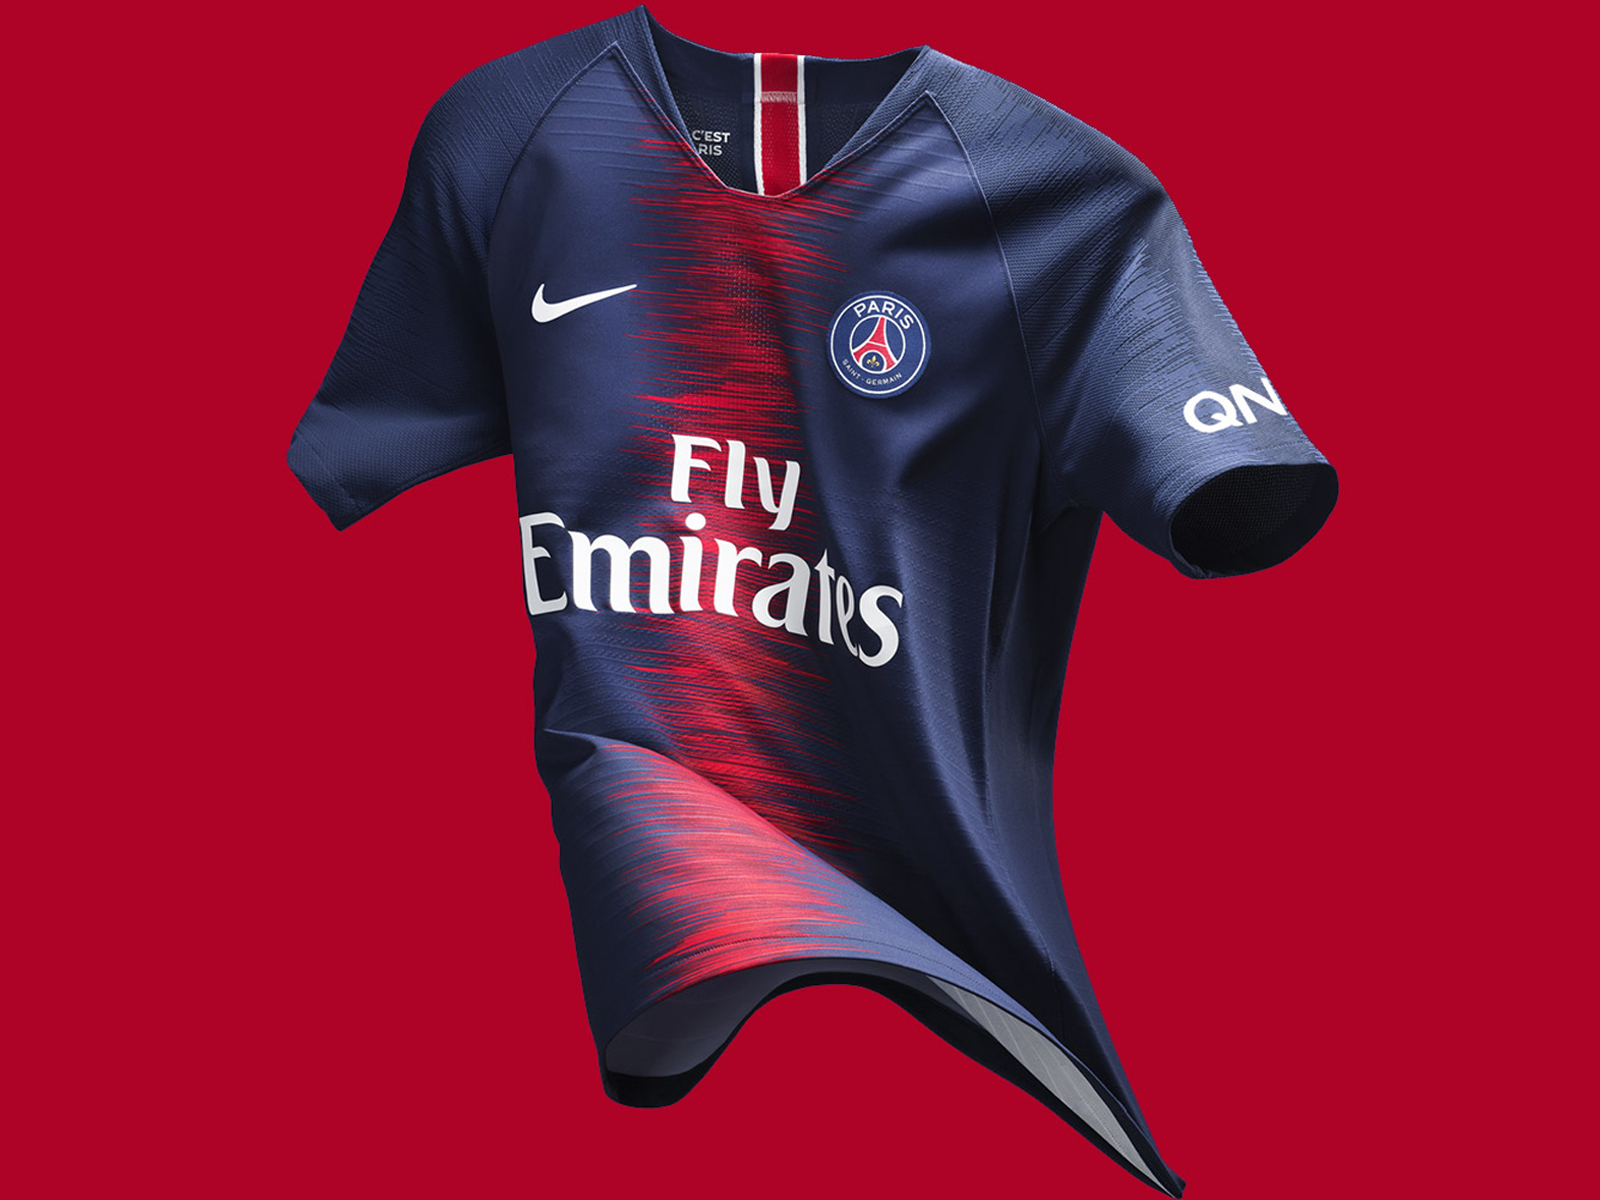 Paris Saint-Germain 2018/19 Home Kit by Matthew Wolff on Dribbble